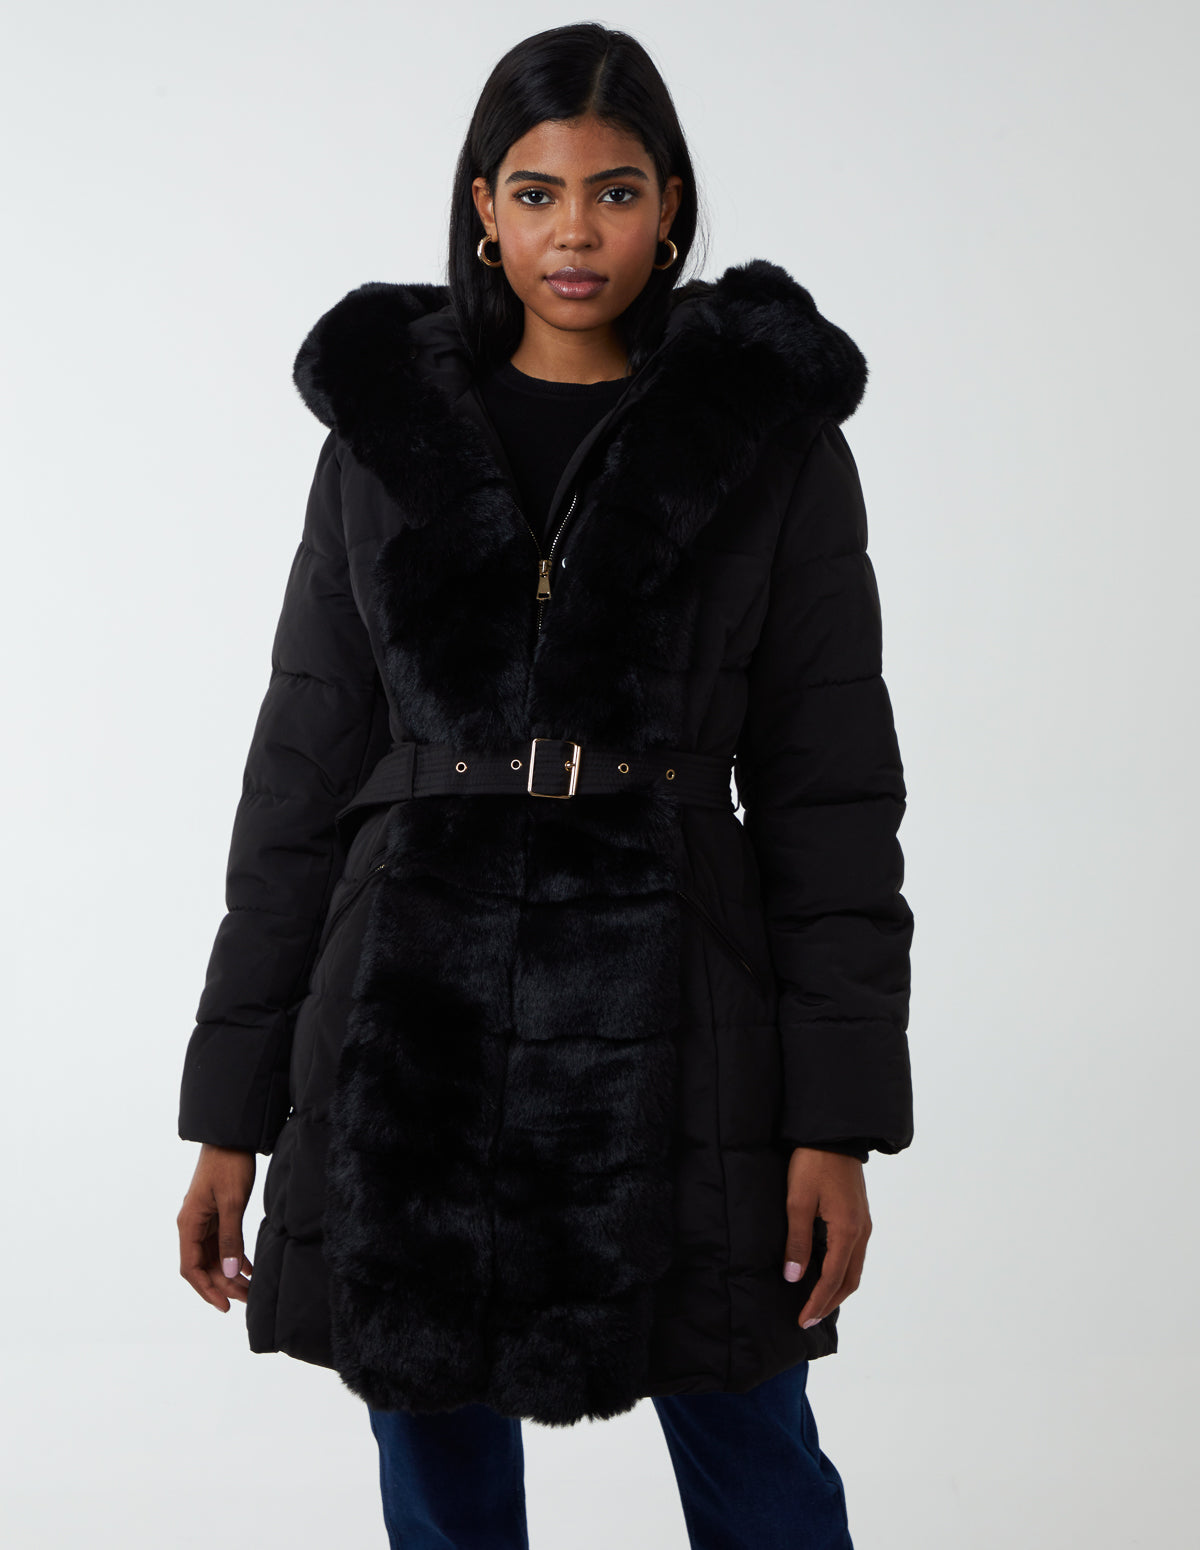 Black, Faux Fur Coat